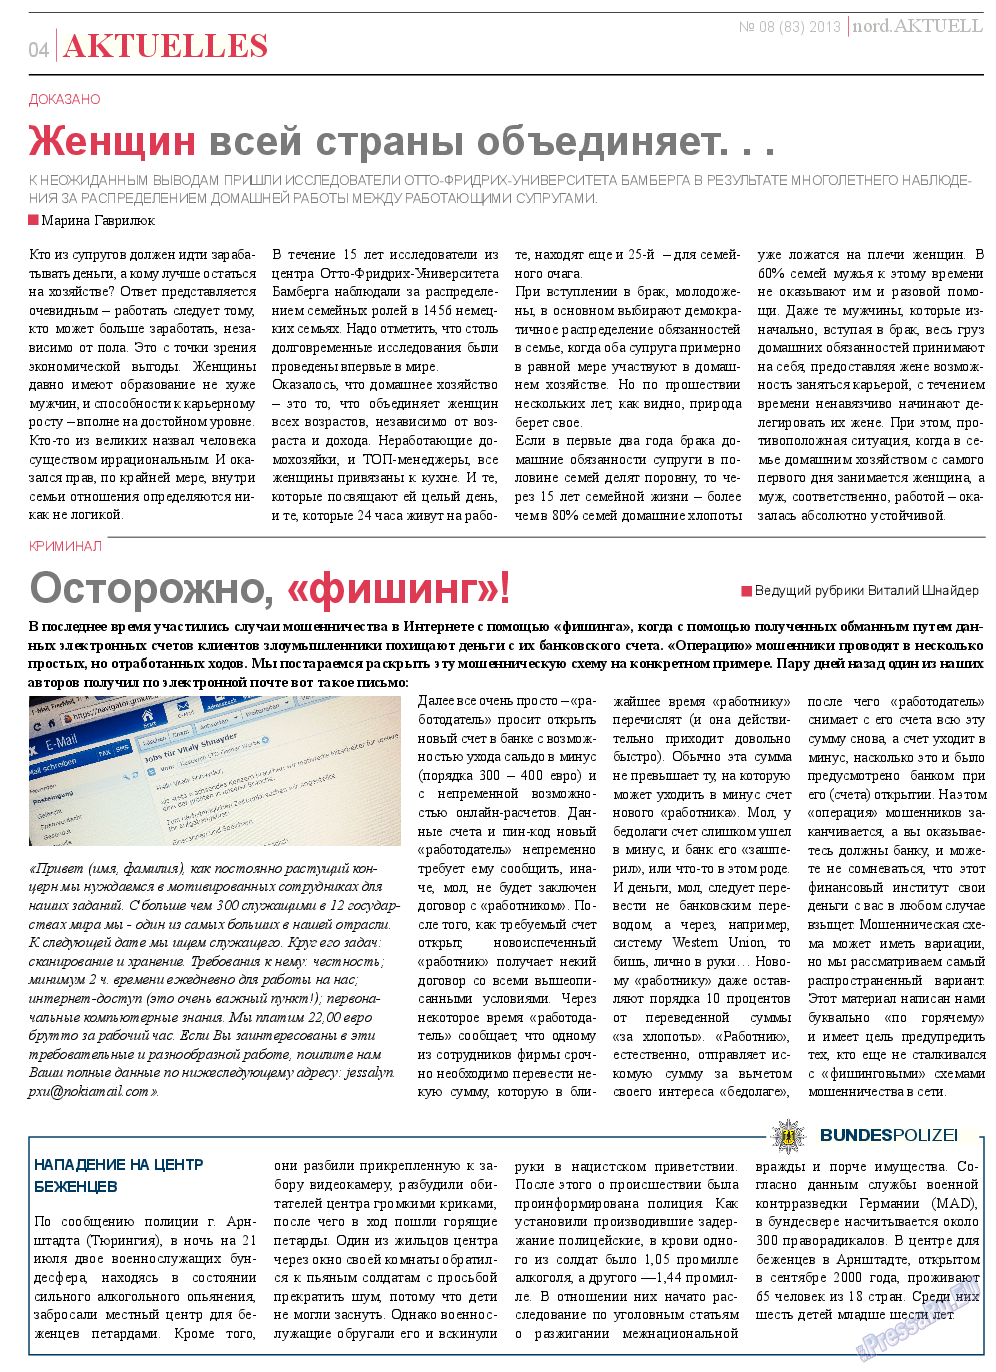 nord.Aktuell, газета. 2013 №8 стр.4